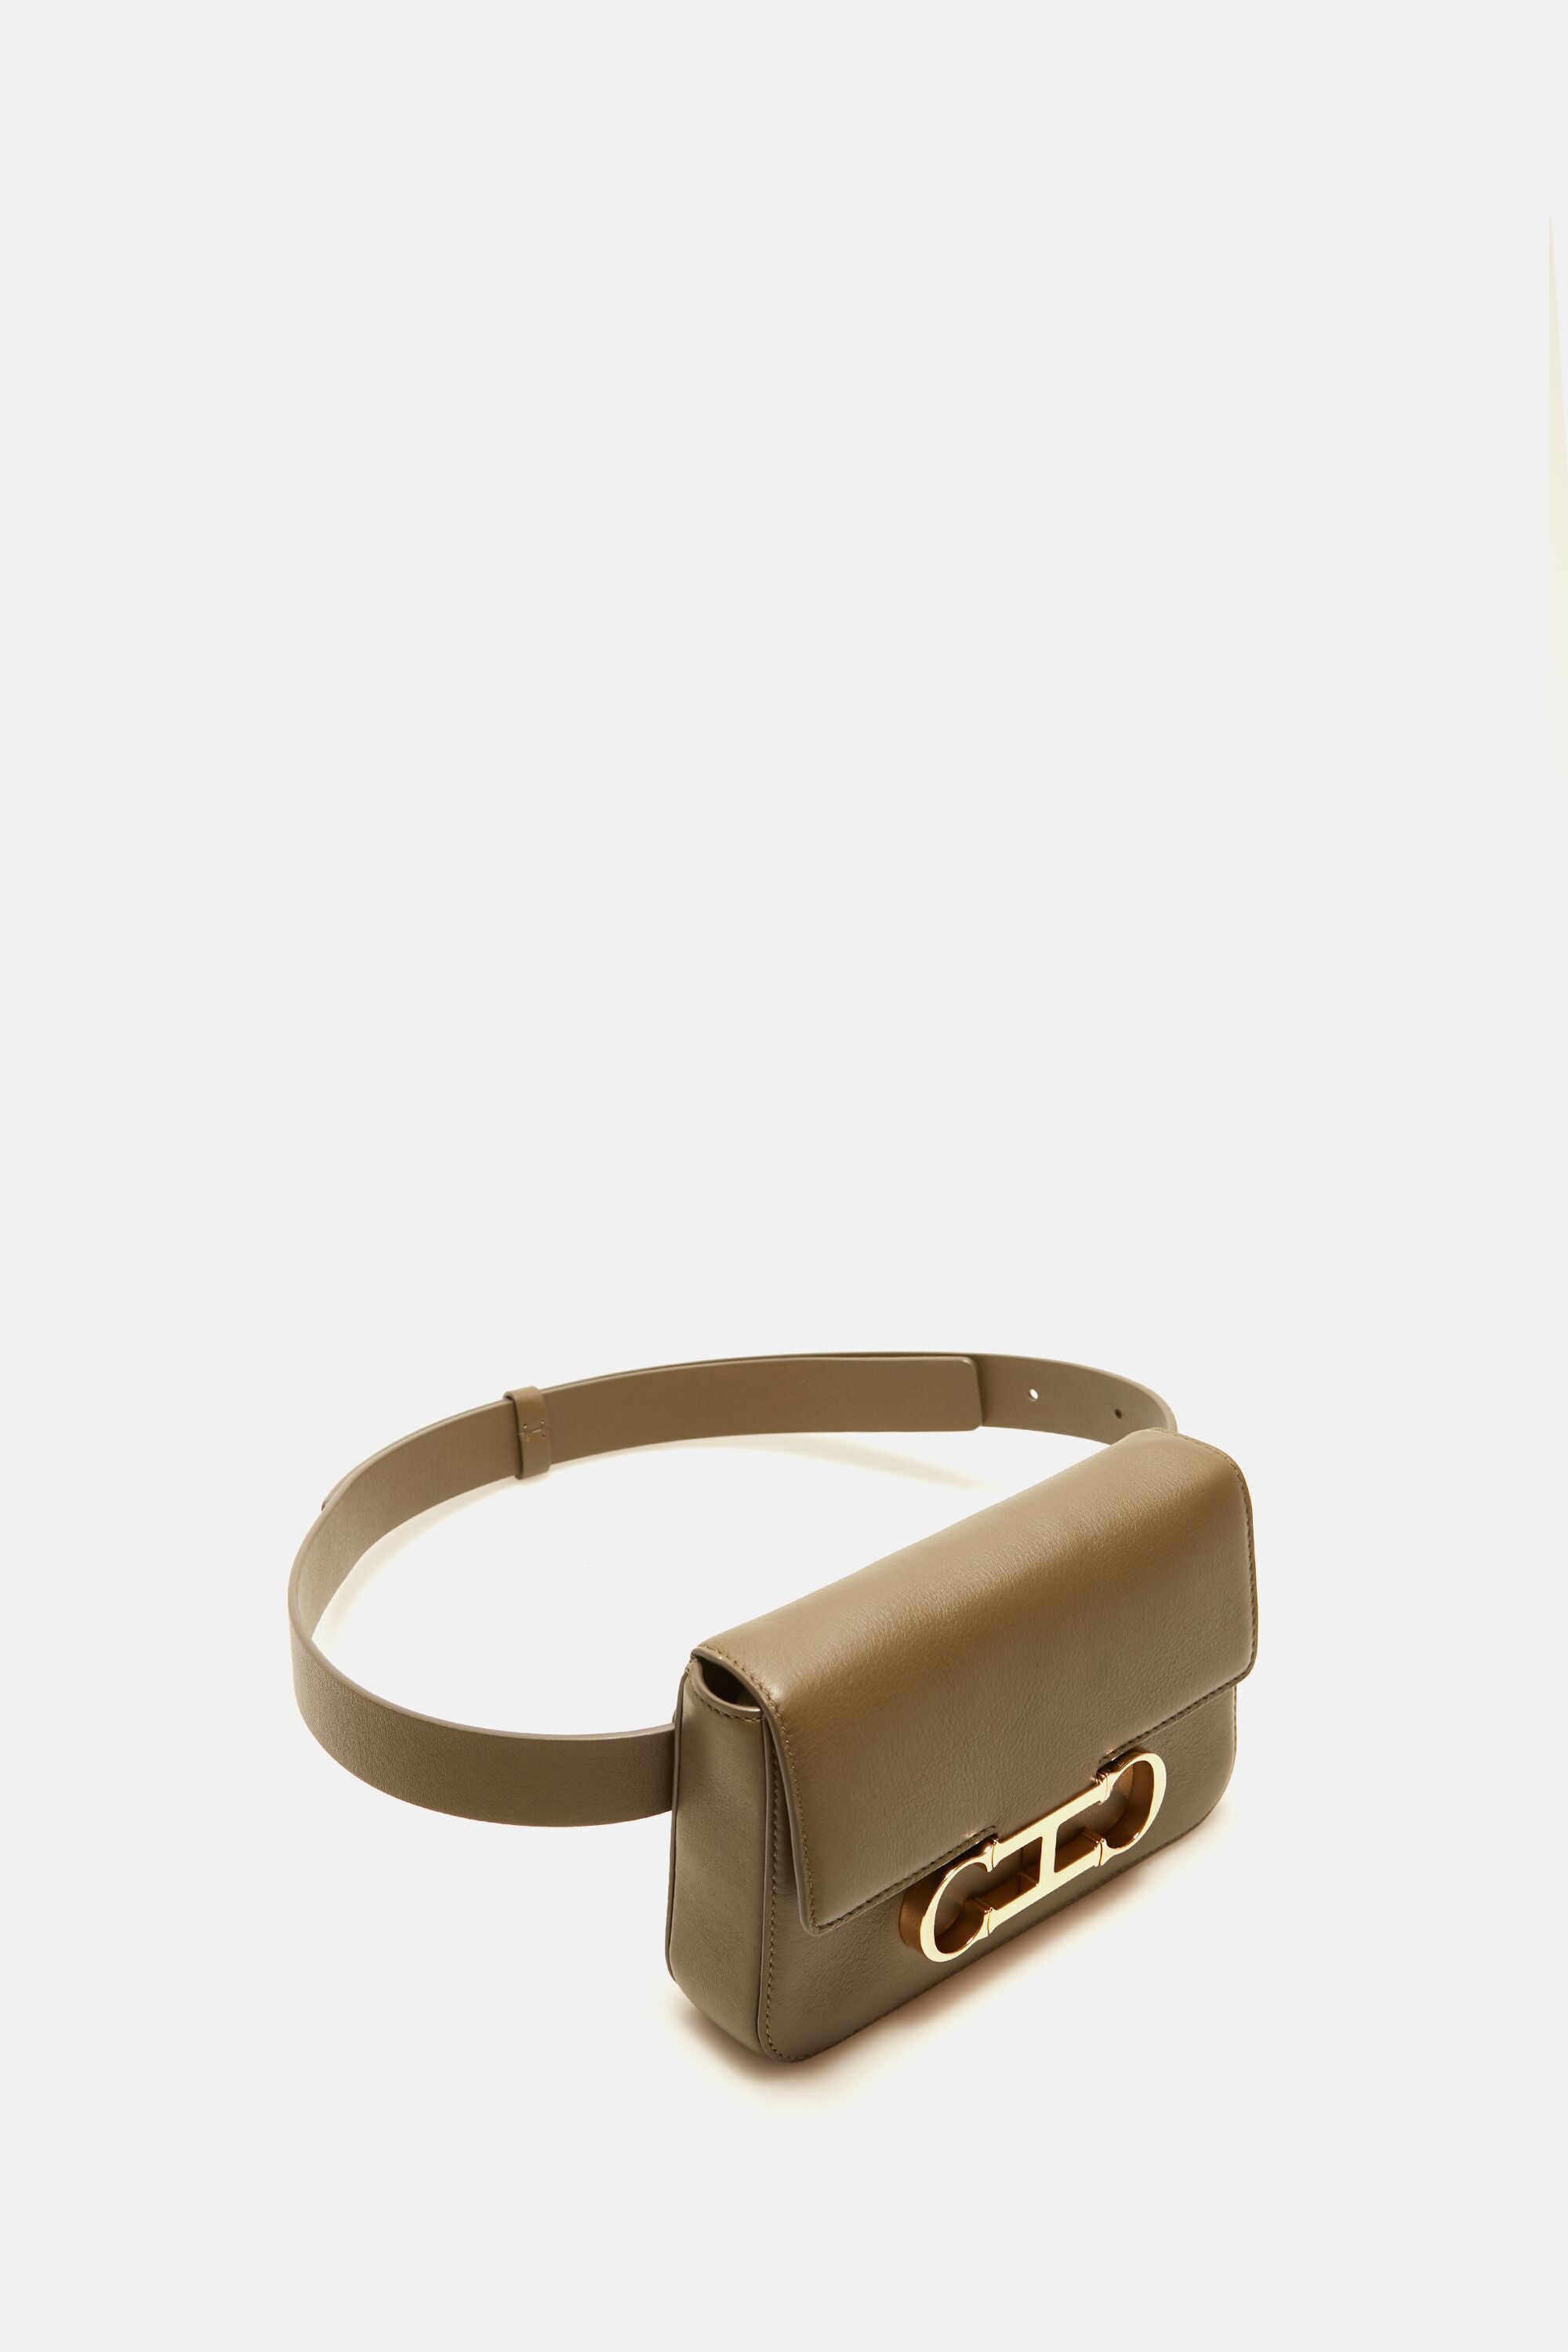 Initials Insignia  Small belt bag khaki - CH Carolina Herrera